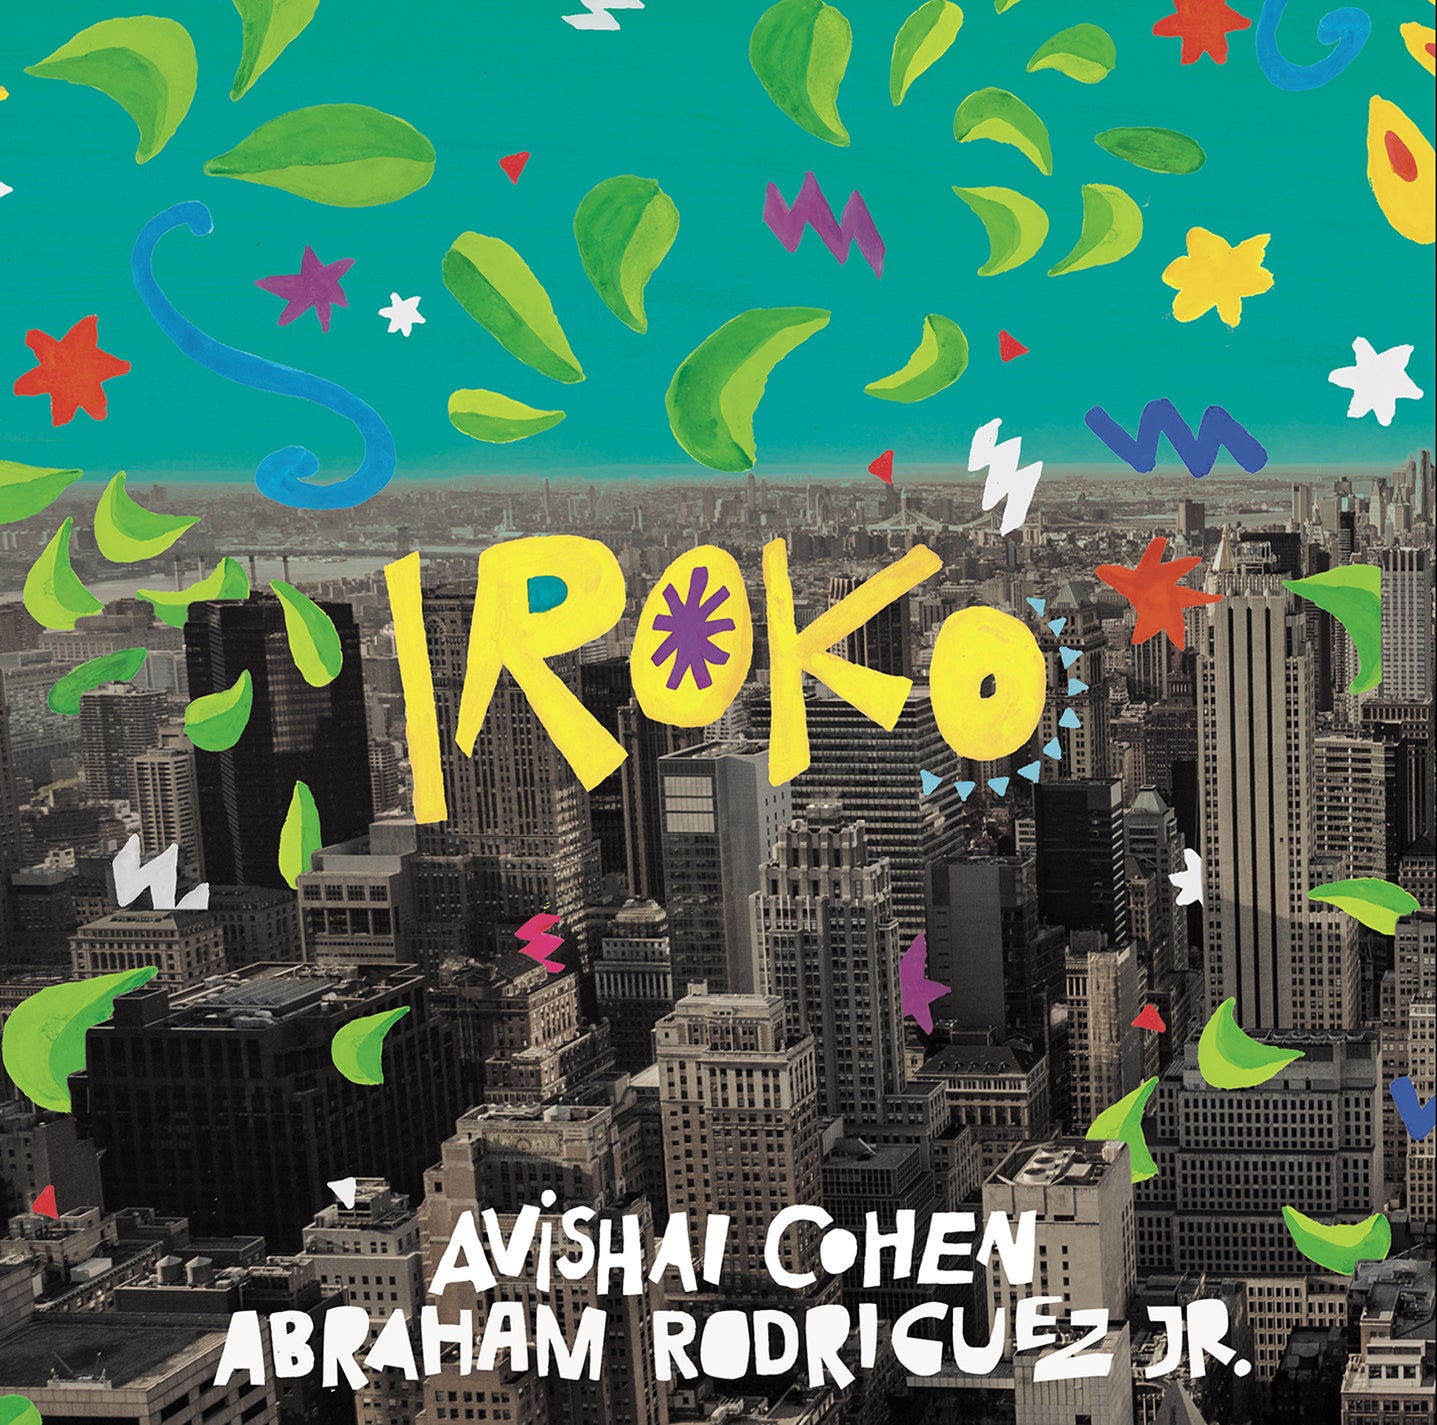 Iroko / Avishai Cohen & Abraham Rodriguez Jr.